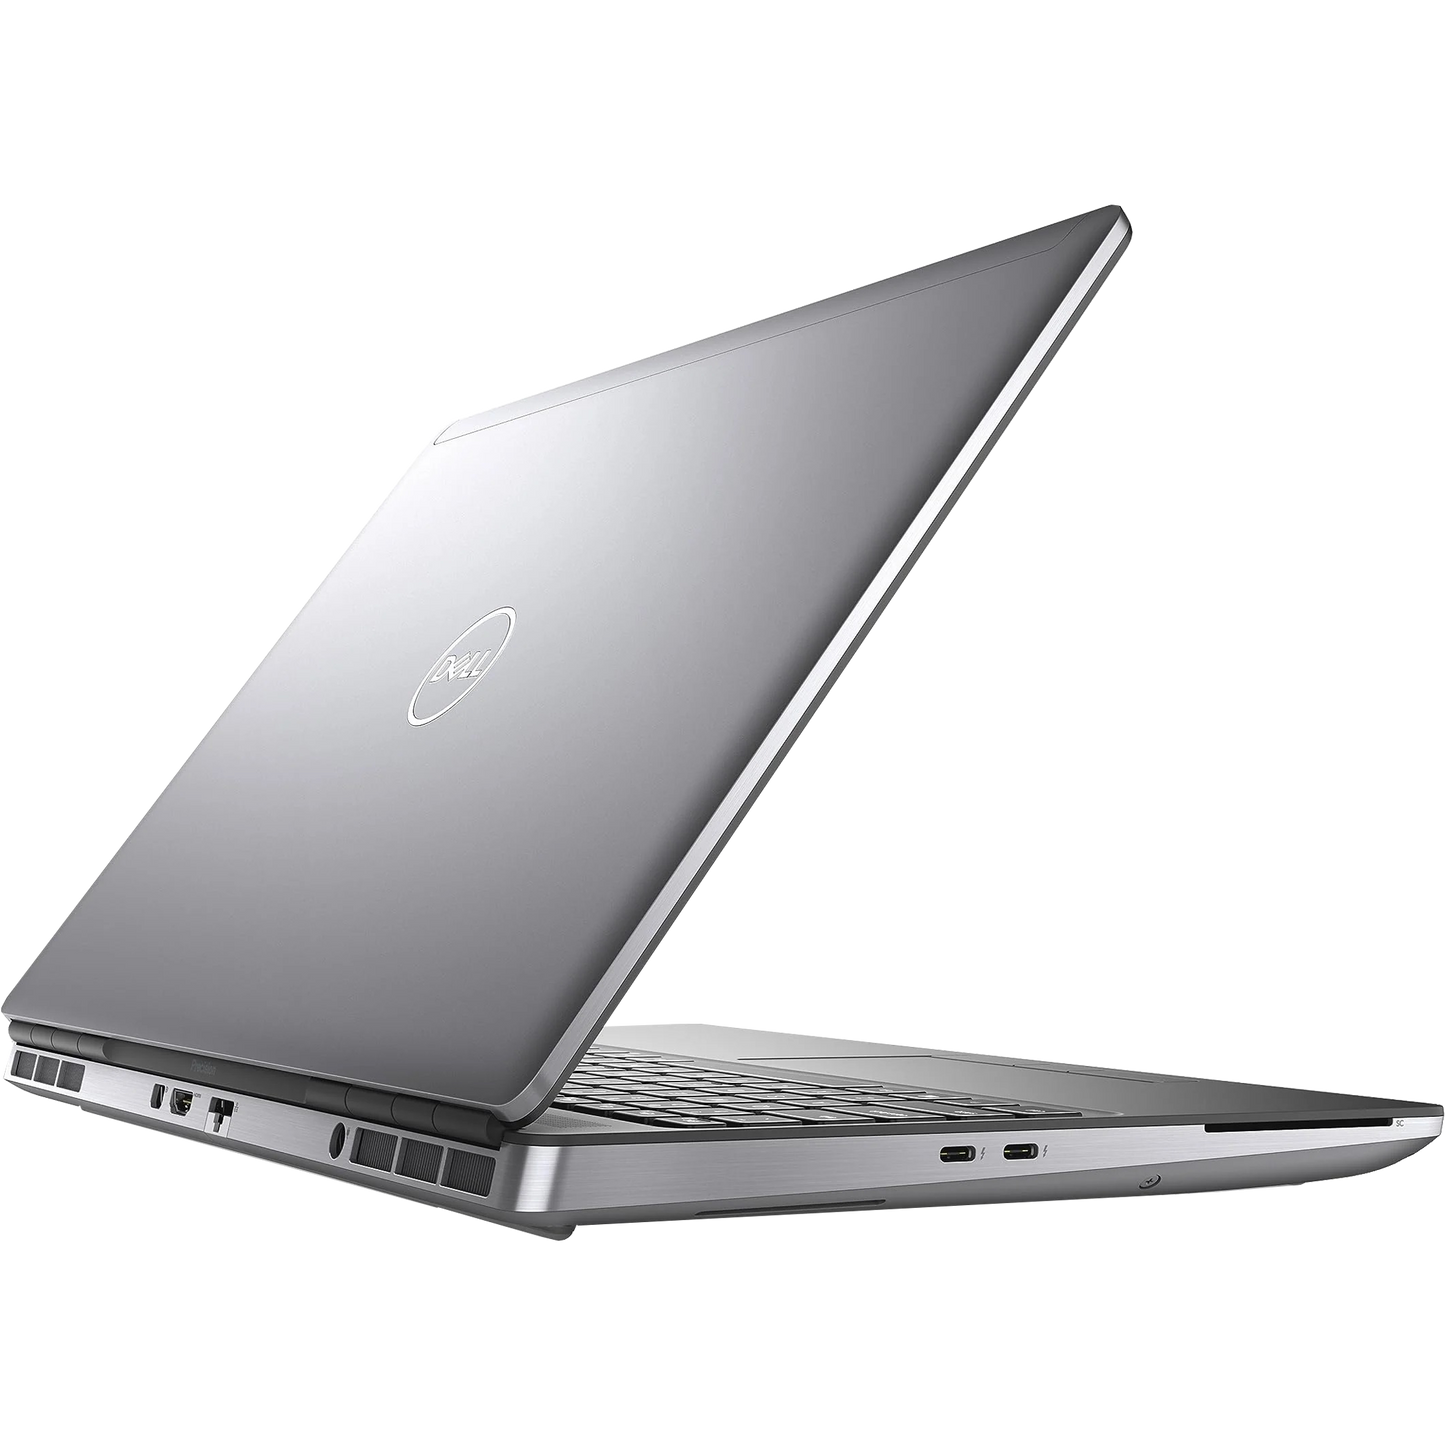 Dell Precision 7550 Intel Xeon Workstation Laptop with 16GB GPU